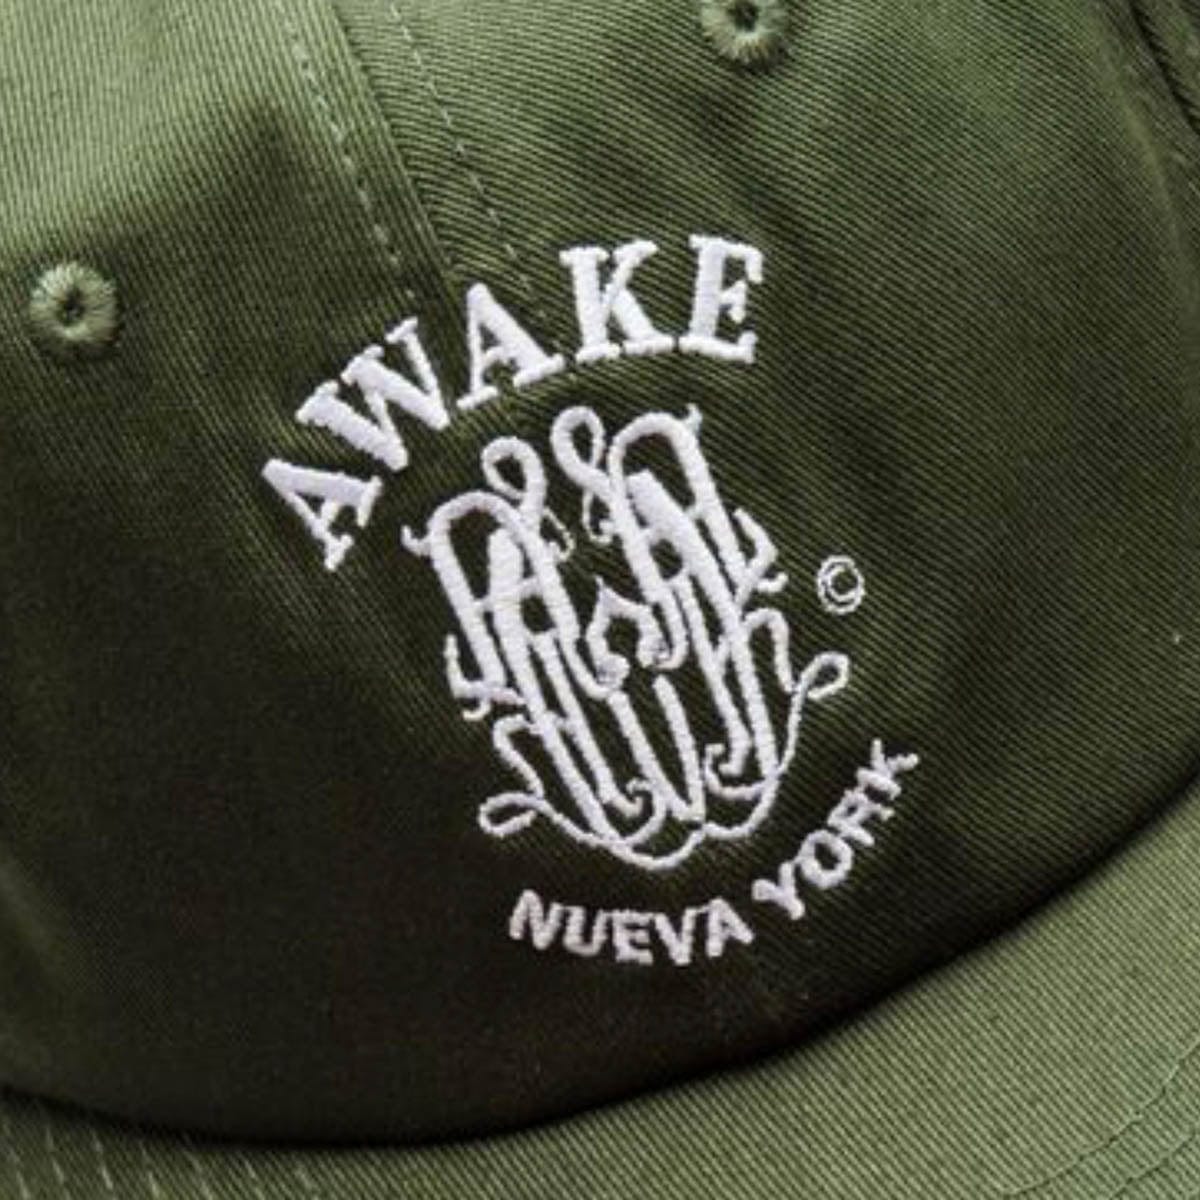 Awake NY Headwear FOREST GREEN / O/S NUEVA YORK CREST AWAKE 6-PANEL HAT